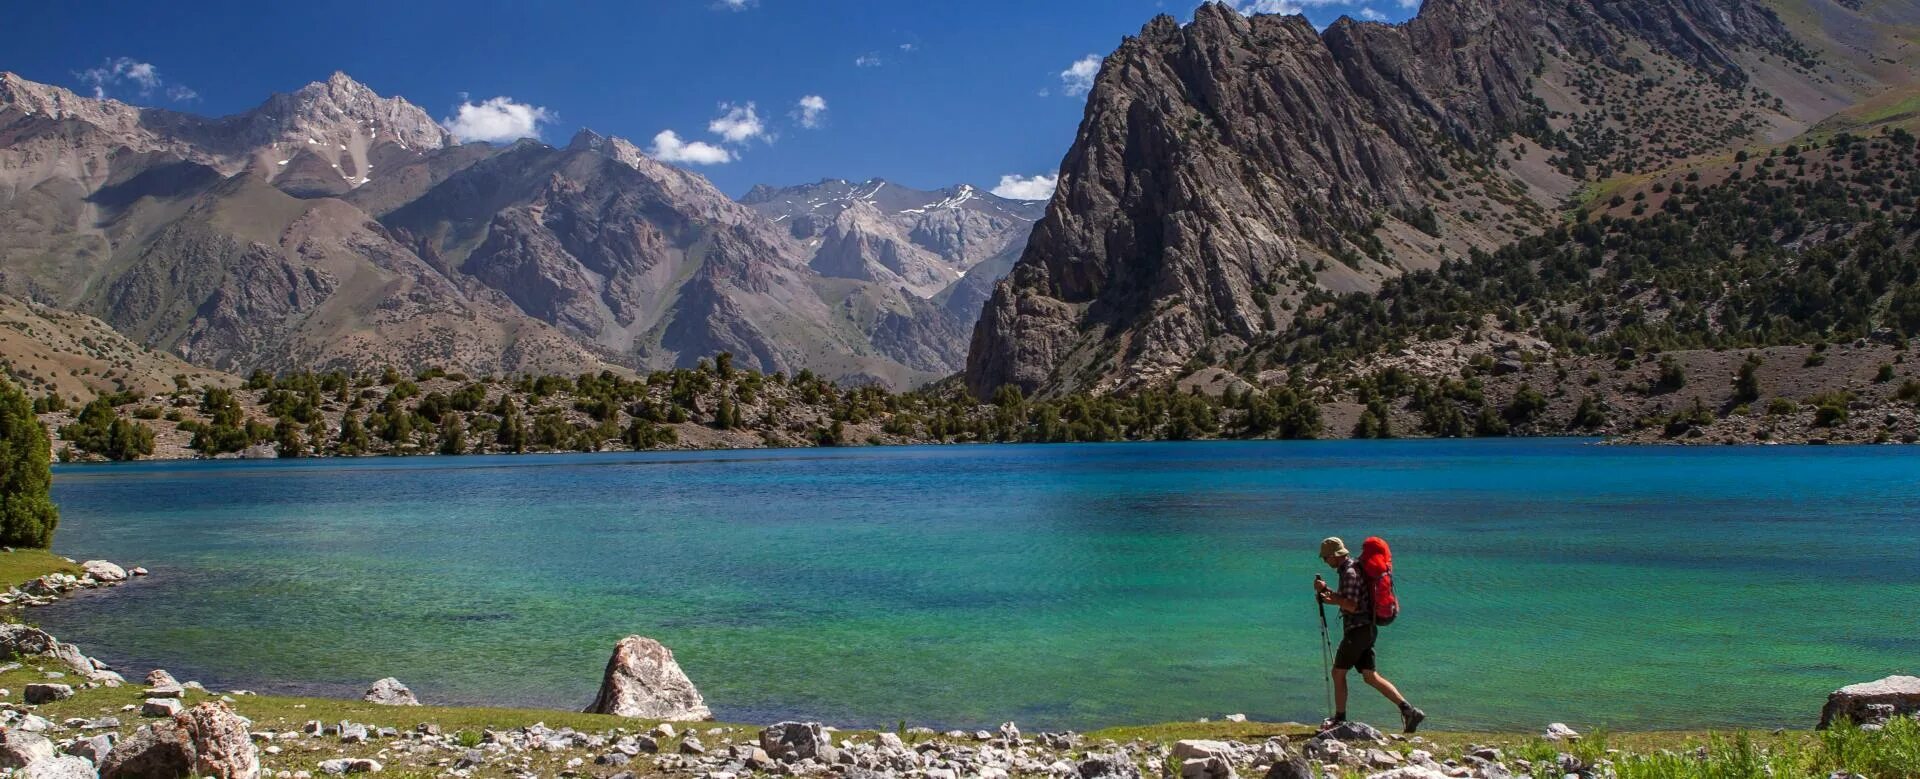 Туристы в горах Памира. Экотуризм Таджикистан. Туризм в Таджикистане. Туристическая место Таджикистана Памир. Таджикистан туризм